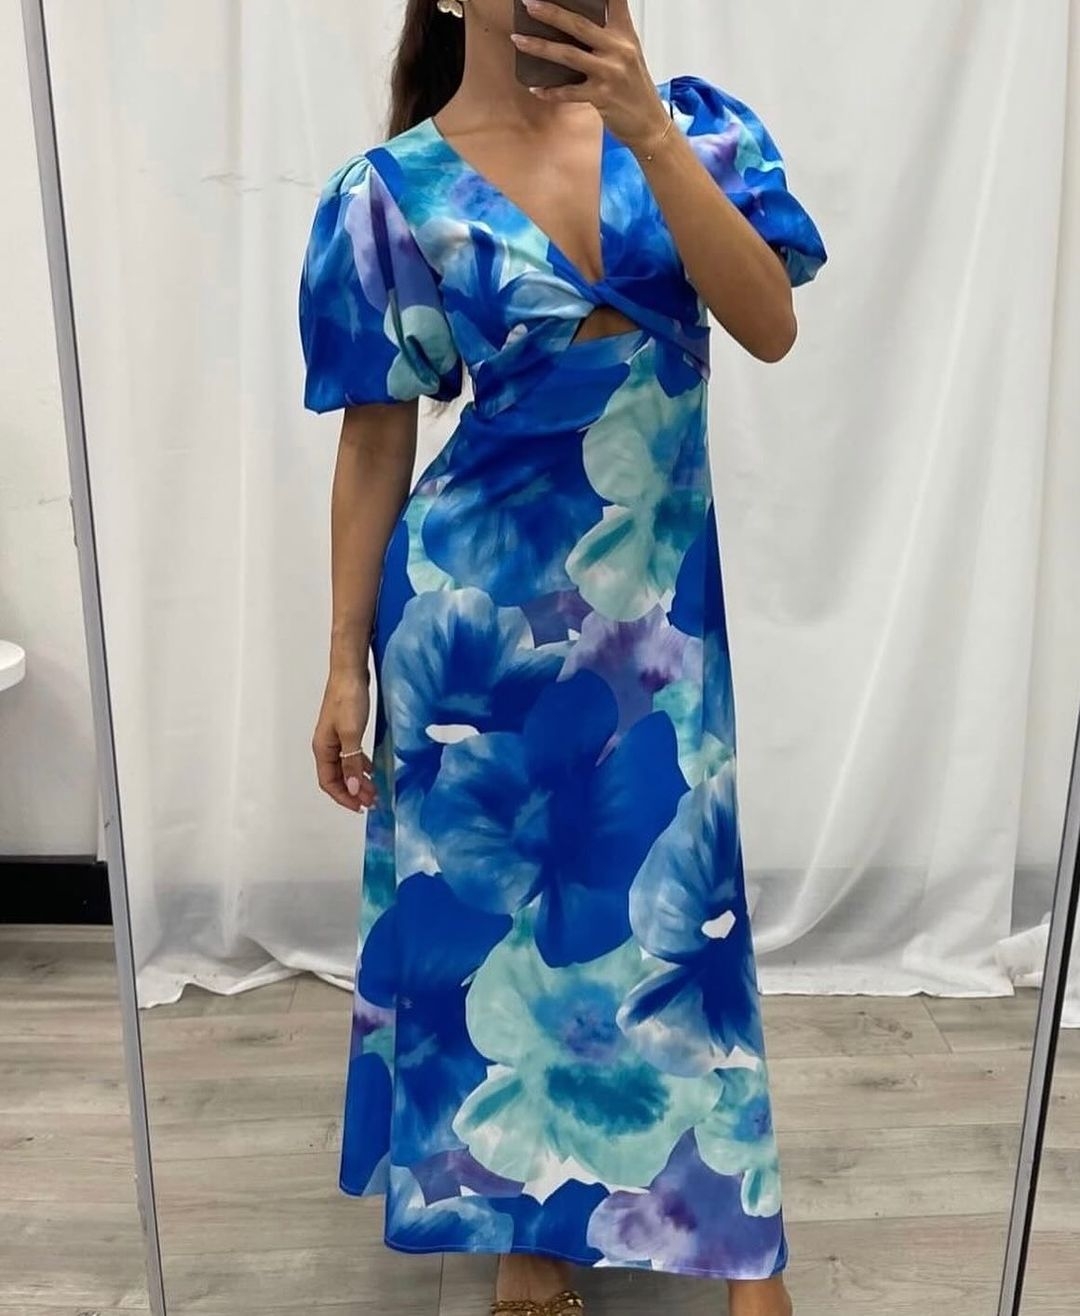 Toperth Blue Floral V-Neck Twist Accent Midi Dress photo review